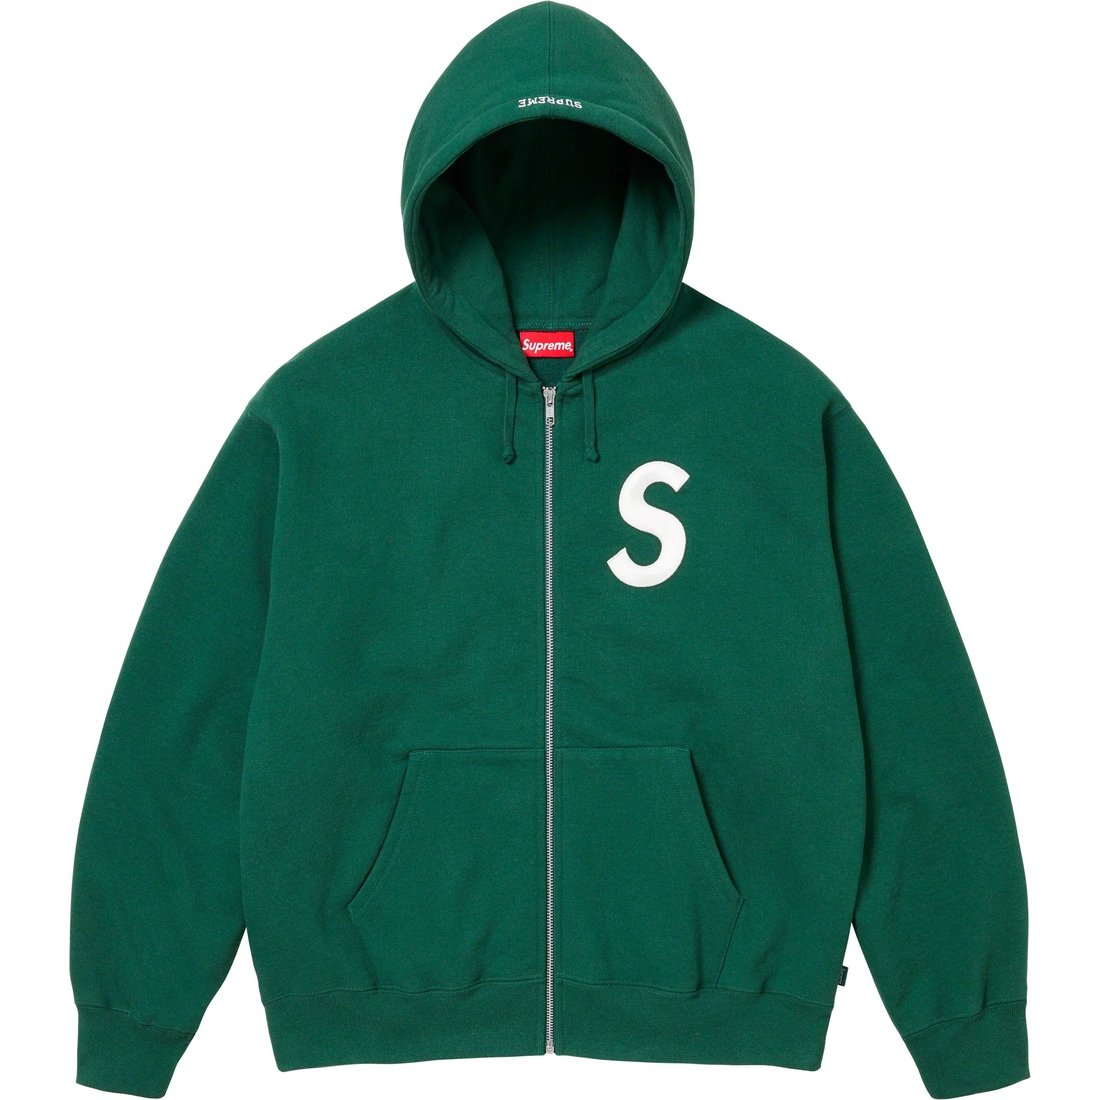 Details on S Logo Zip Up Hooded Sweatshirt Dark Green from fall winter 2023 (Price is $168)